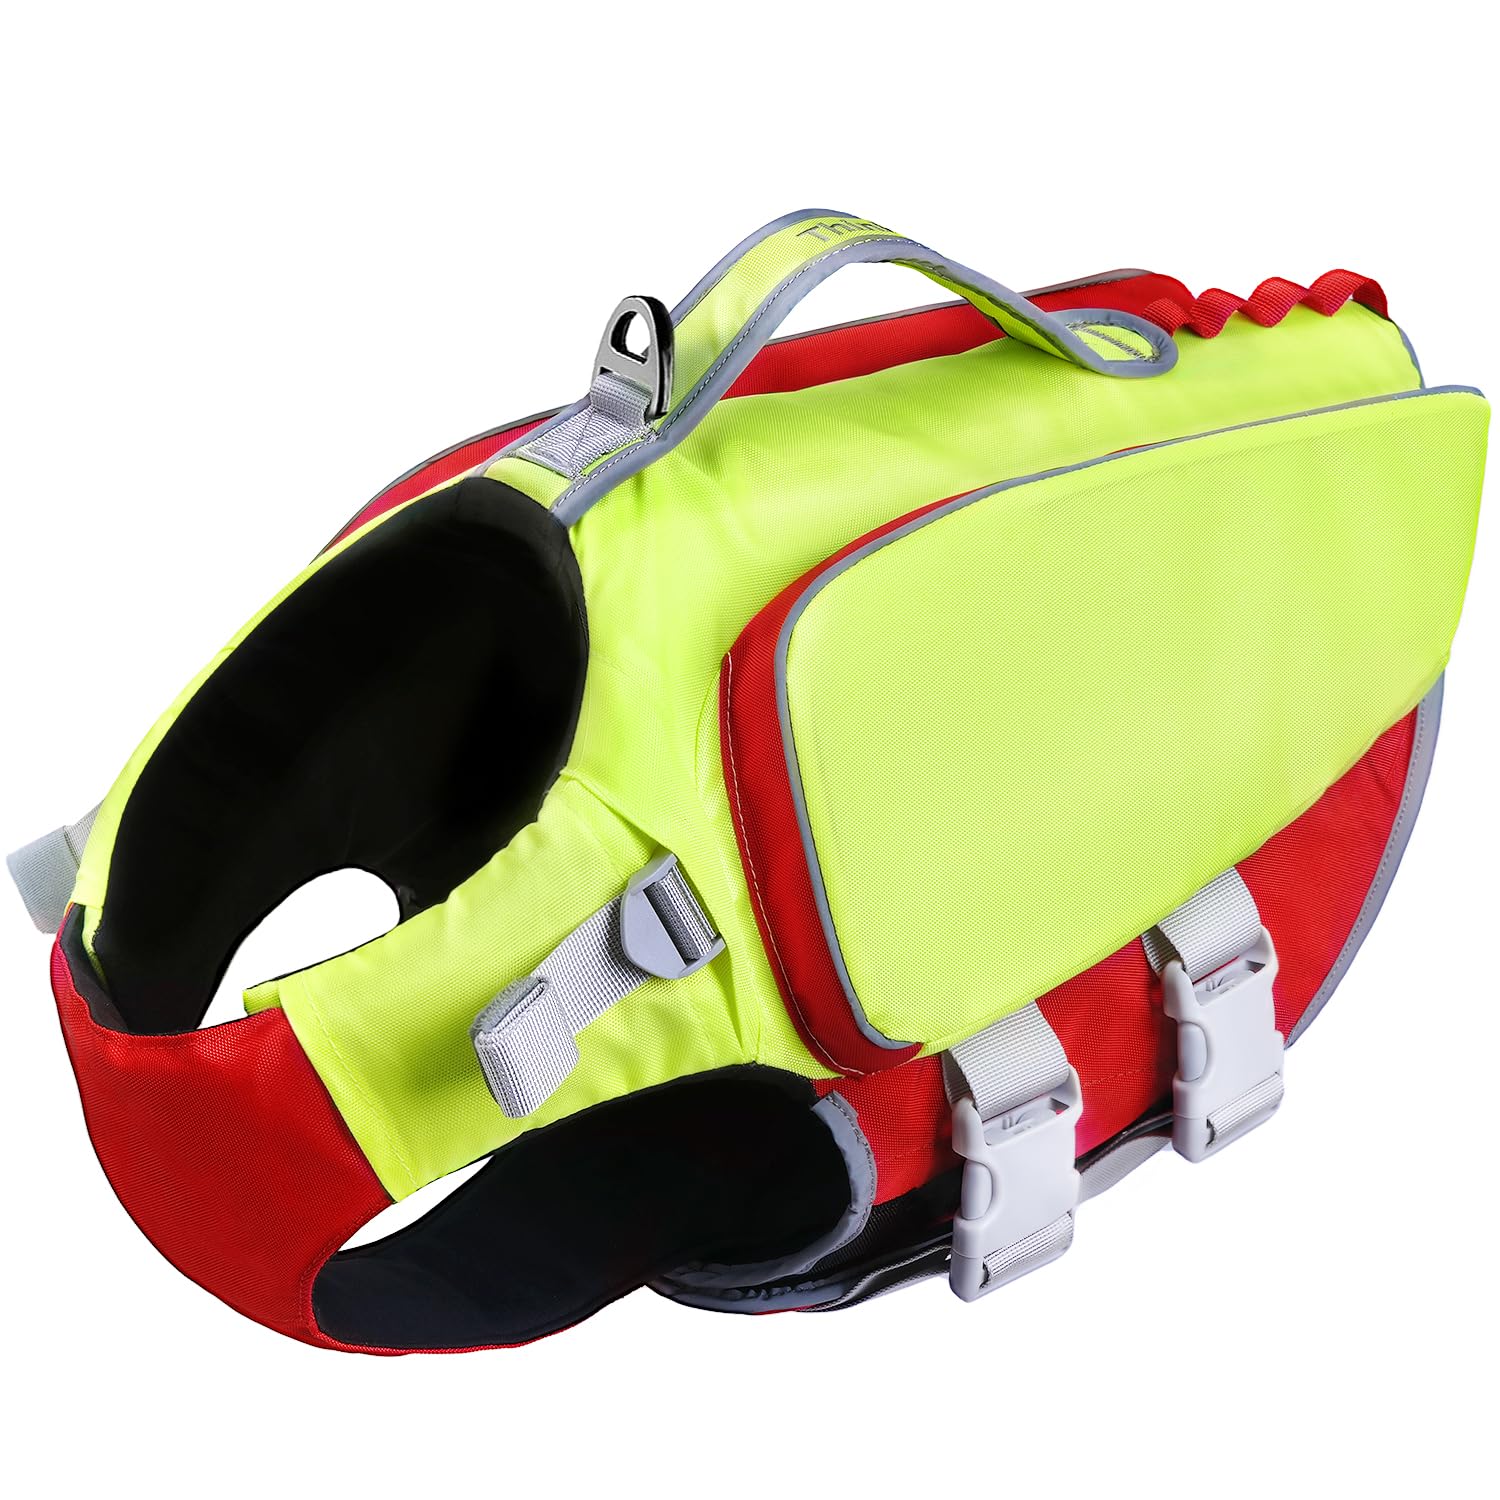 ThinkPetの犬用ライフジャケットハーネス 小型中型大型犬用 反射ベスト ライフジャケット 泳ぎ用 高浮力 調節可能なフローティングベスト救助ハンドル付き ミディアム 緑と赤の配色